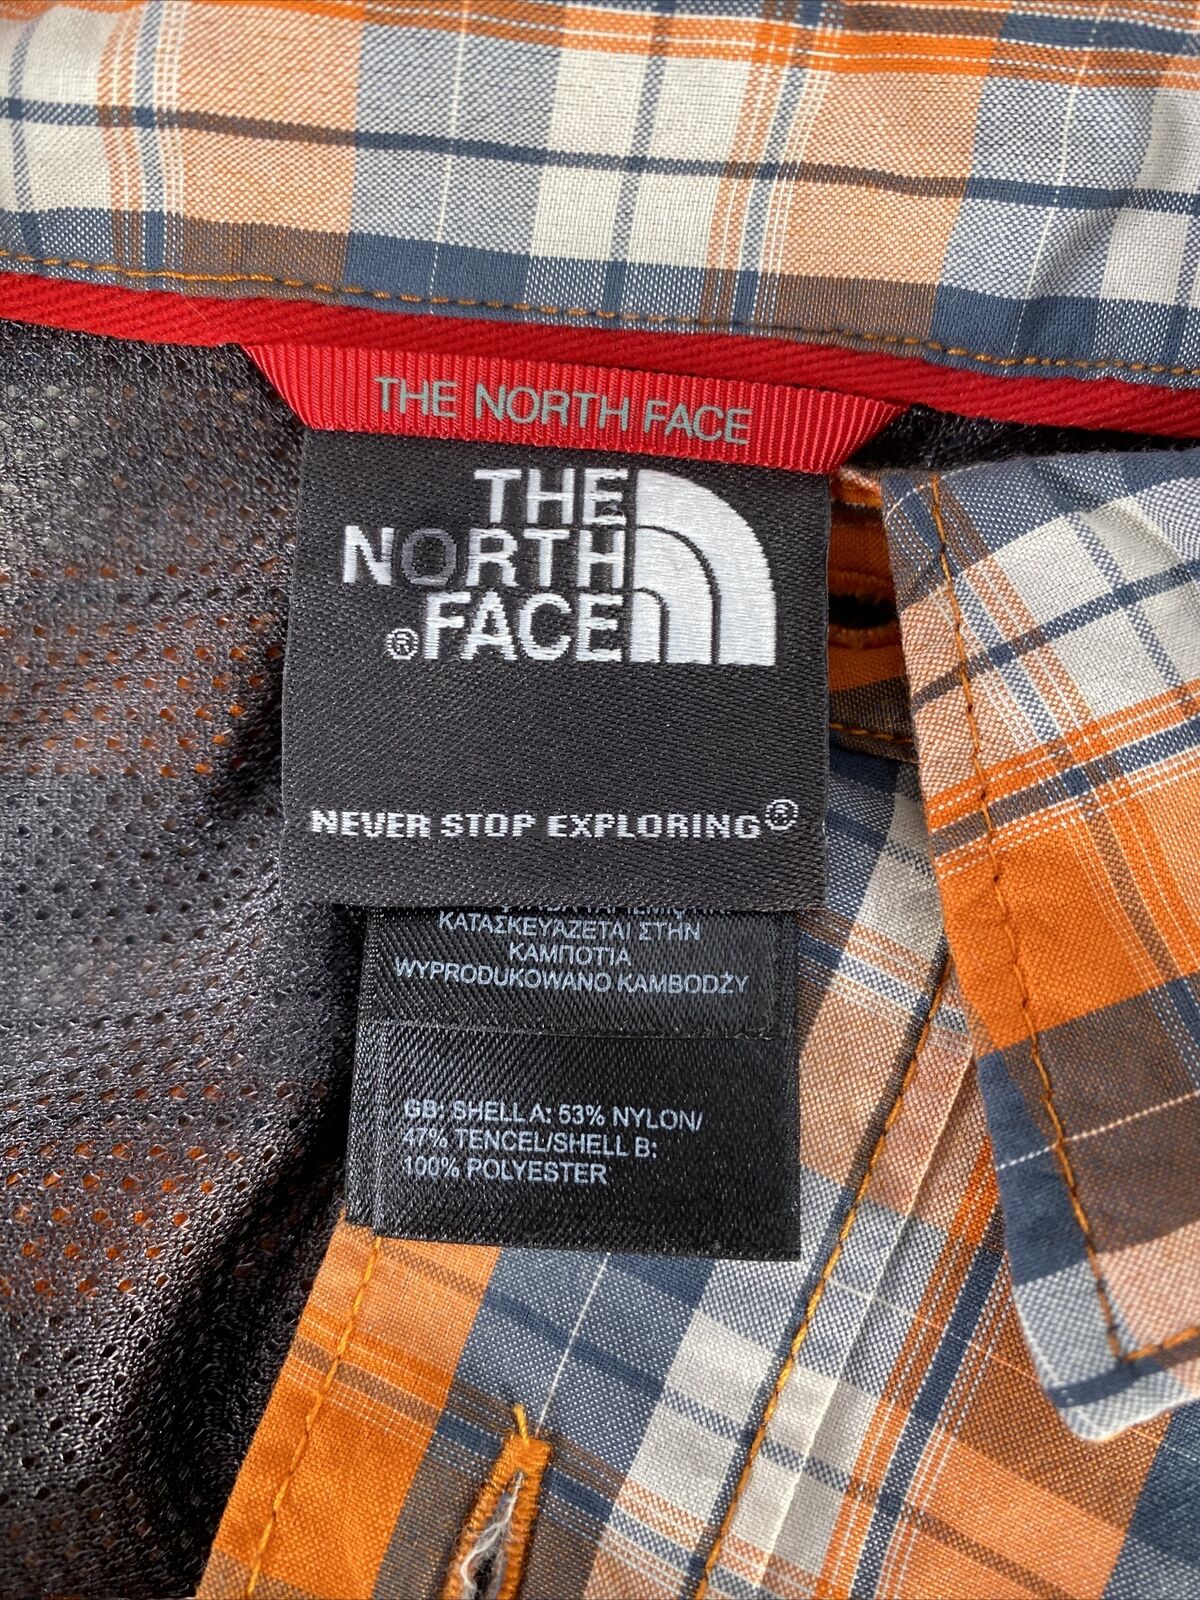 The North Face Men's Orange/Gray Short Sleeve Button Up Shirt - M